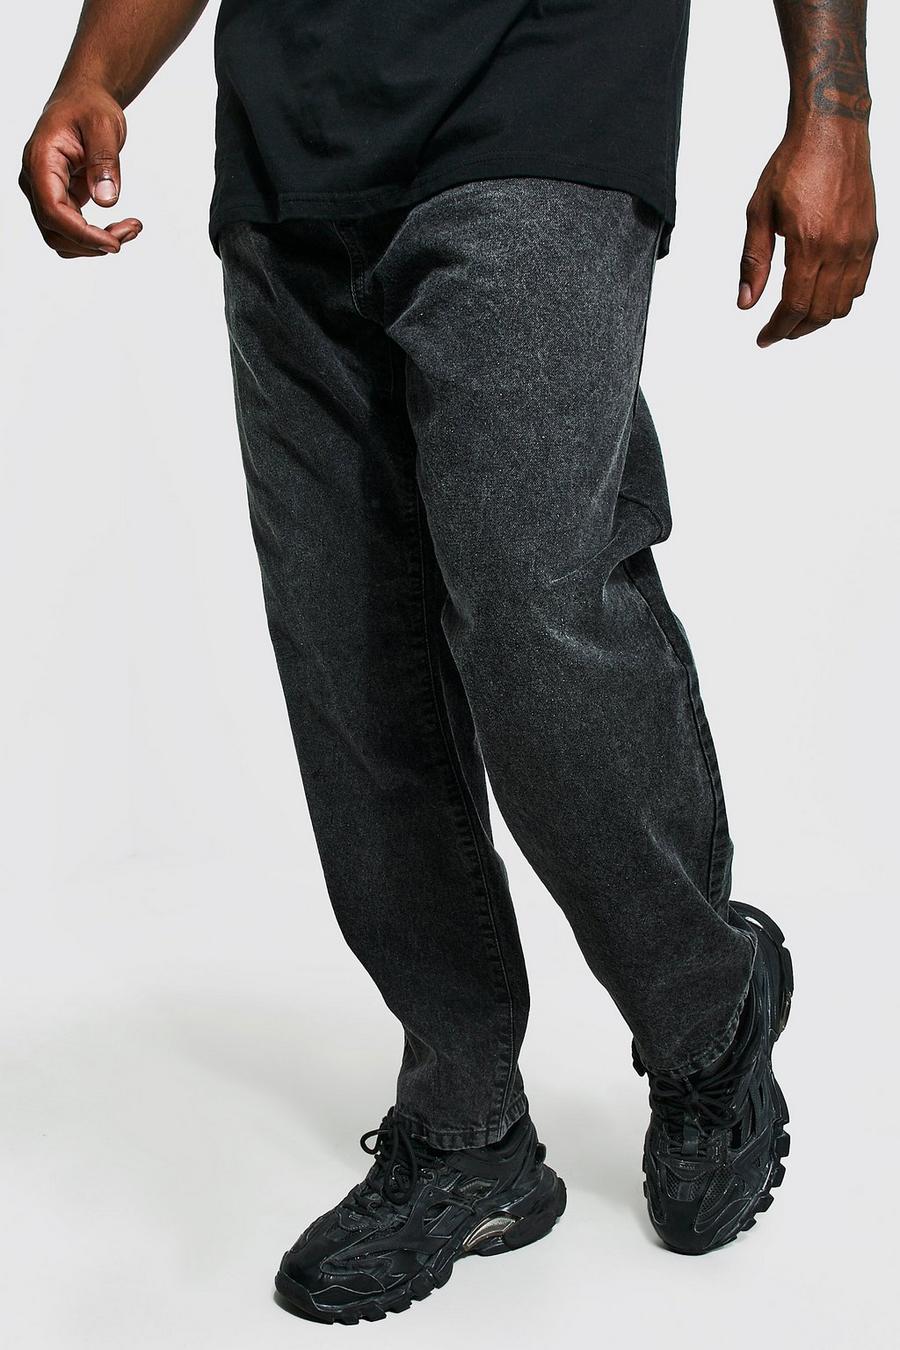 Jeans Plus Size Slim Fit misto a cotone riciclate, Charcoal gris